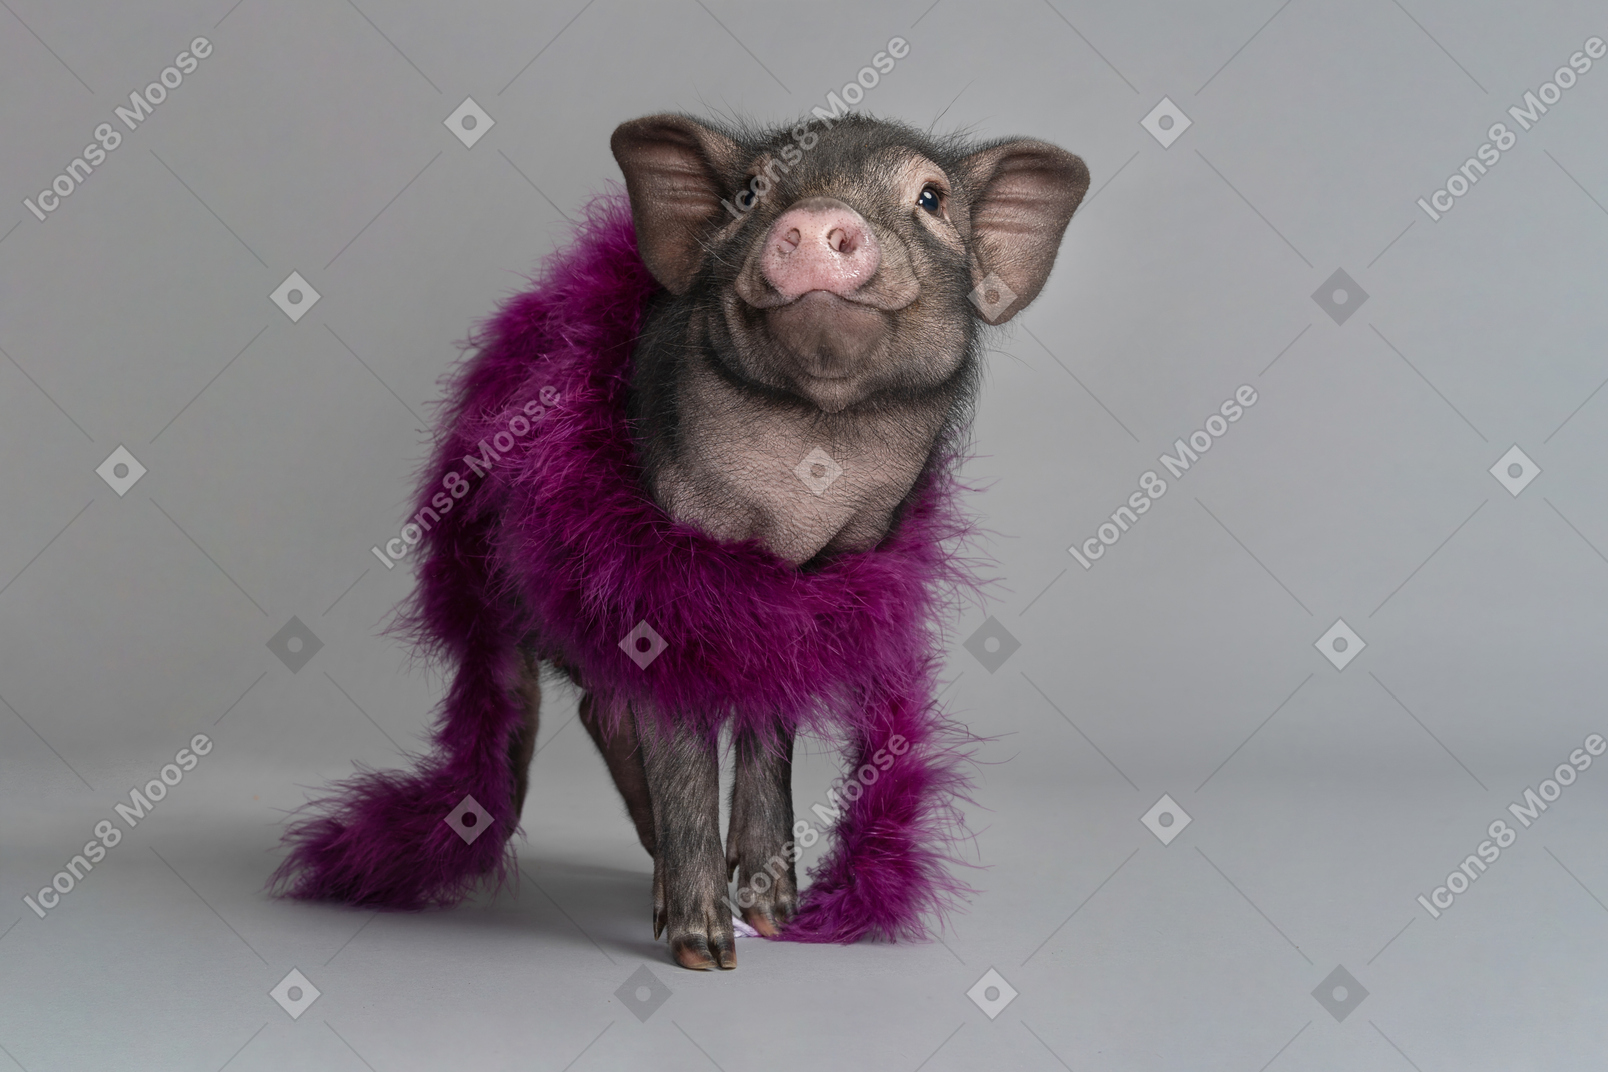 Cute stylish miniature pig showing itself